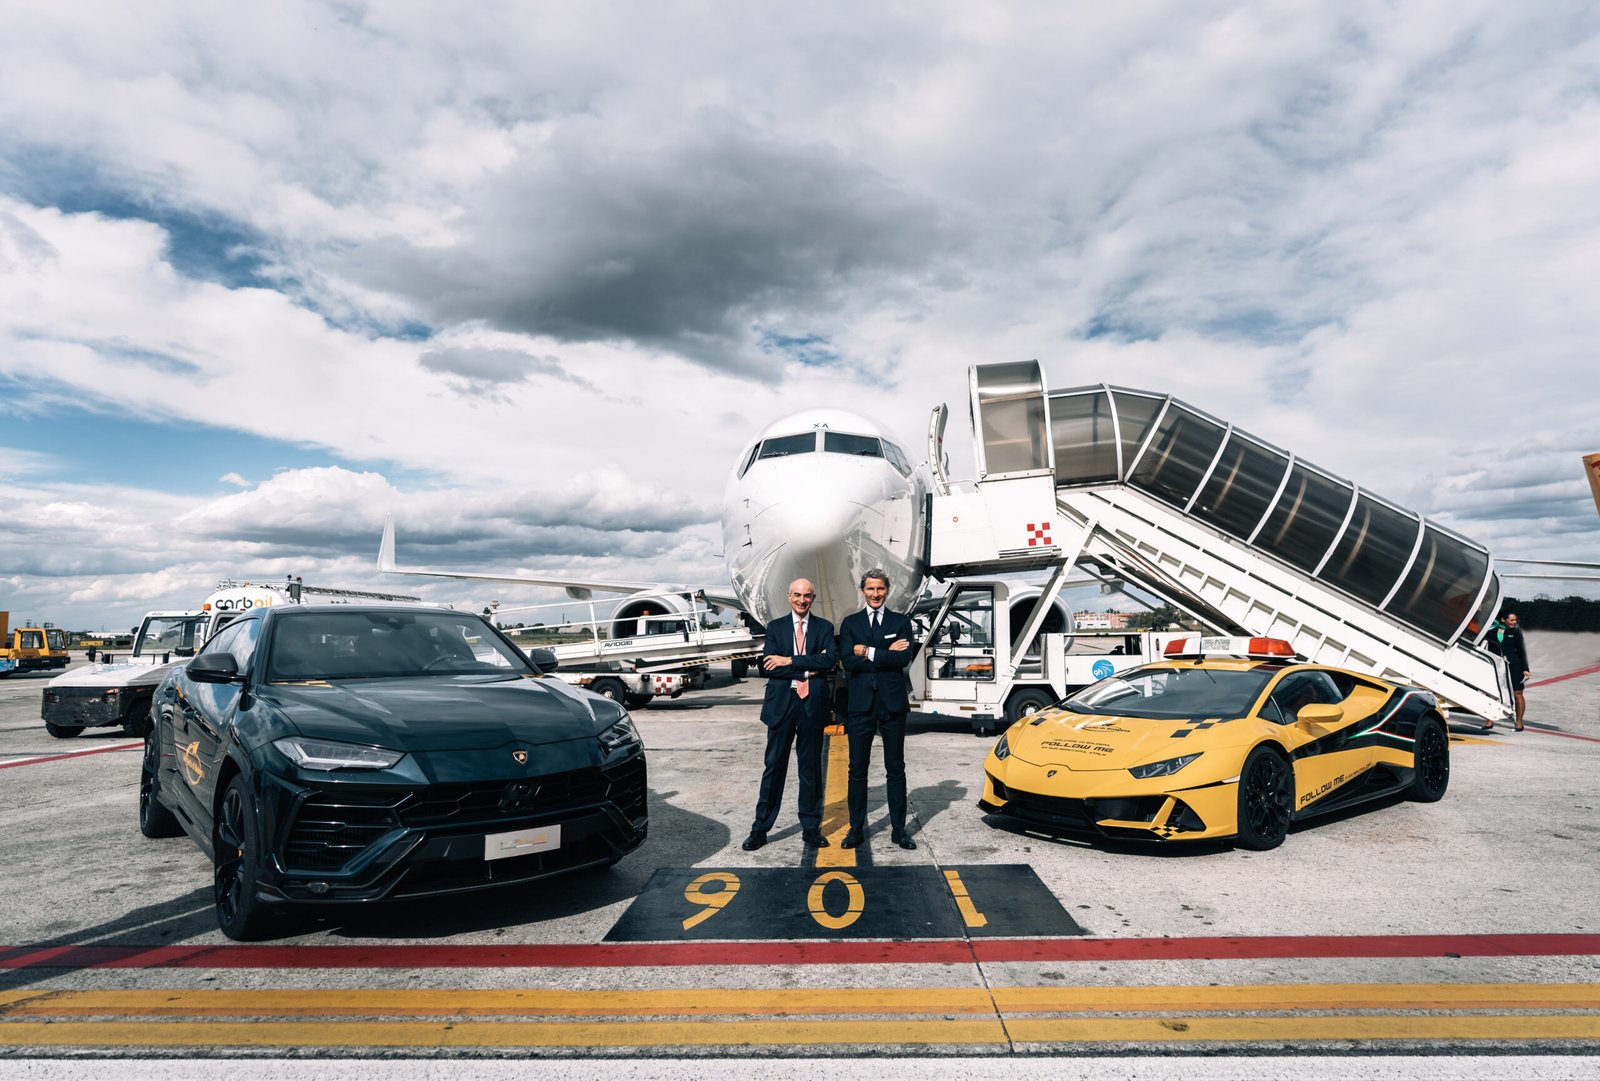 Automobili Lamborghini renews and develops partnership with Bologna's Marconi Airport